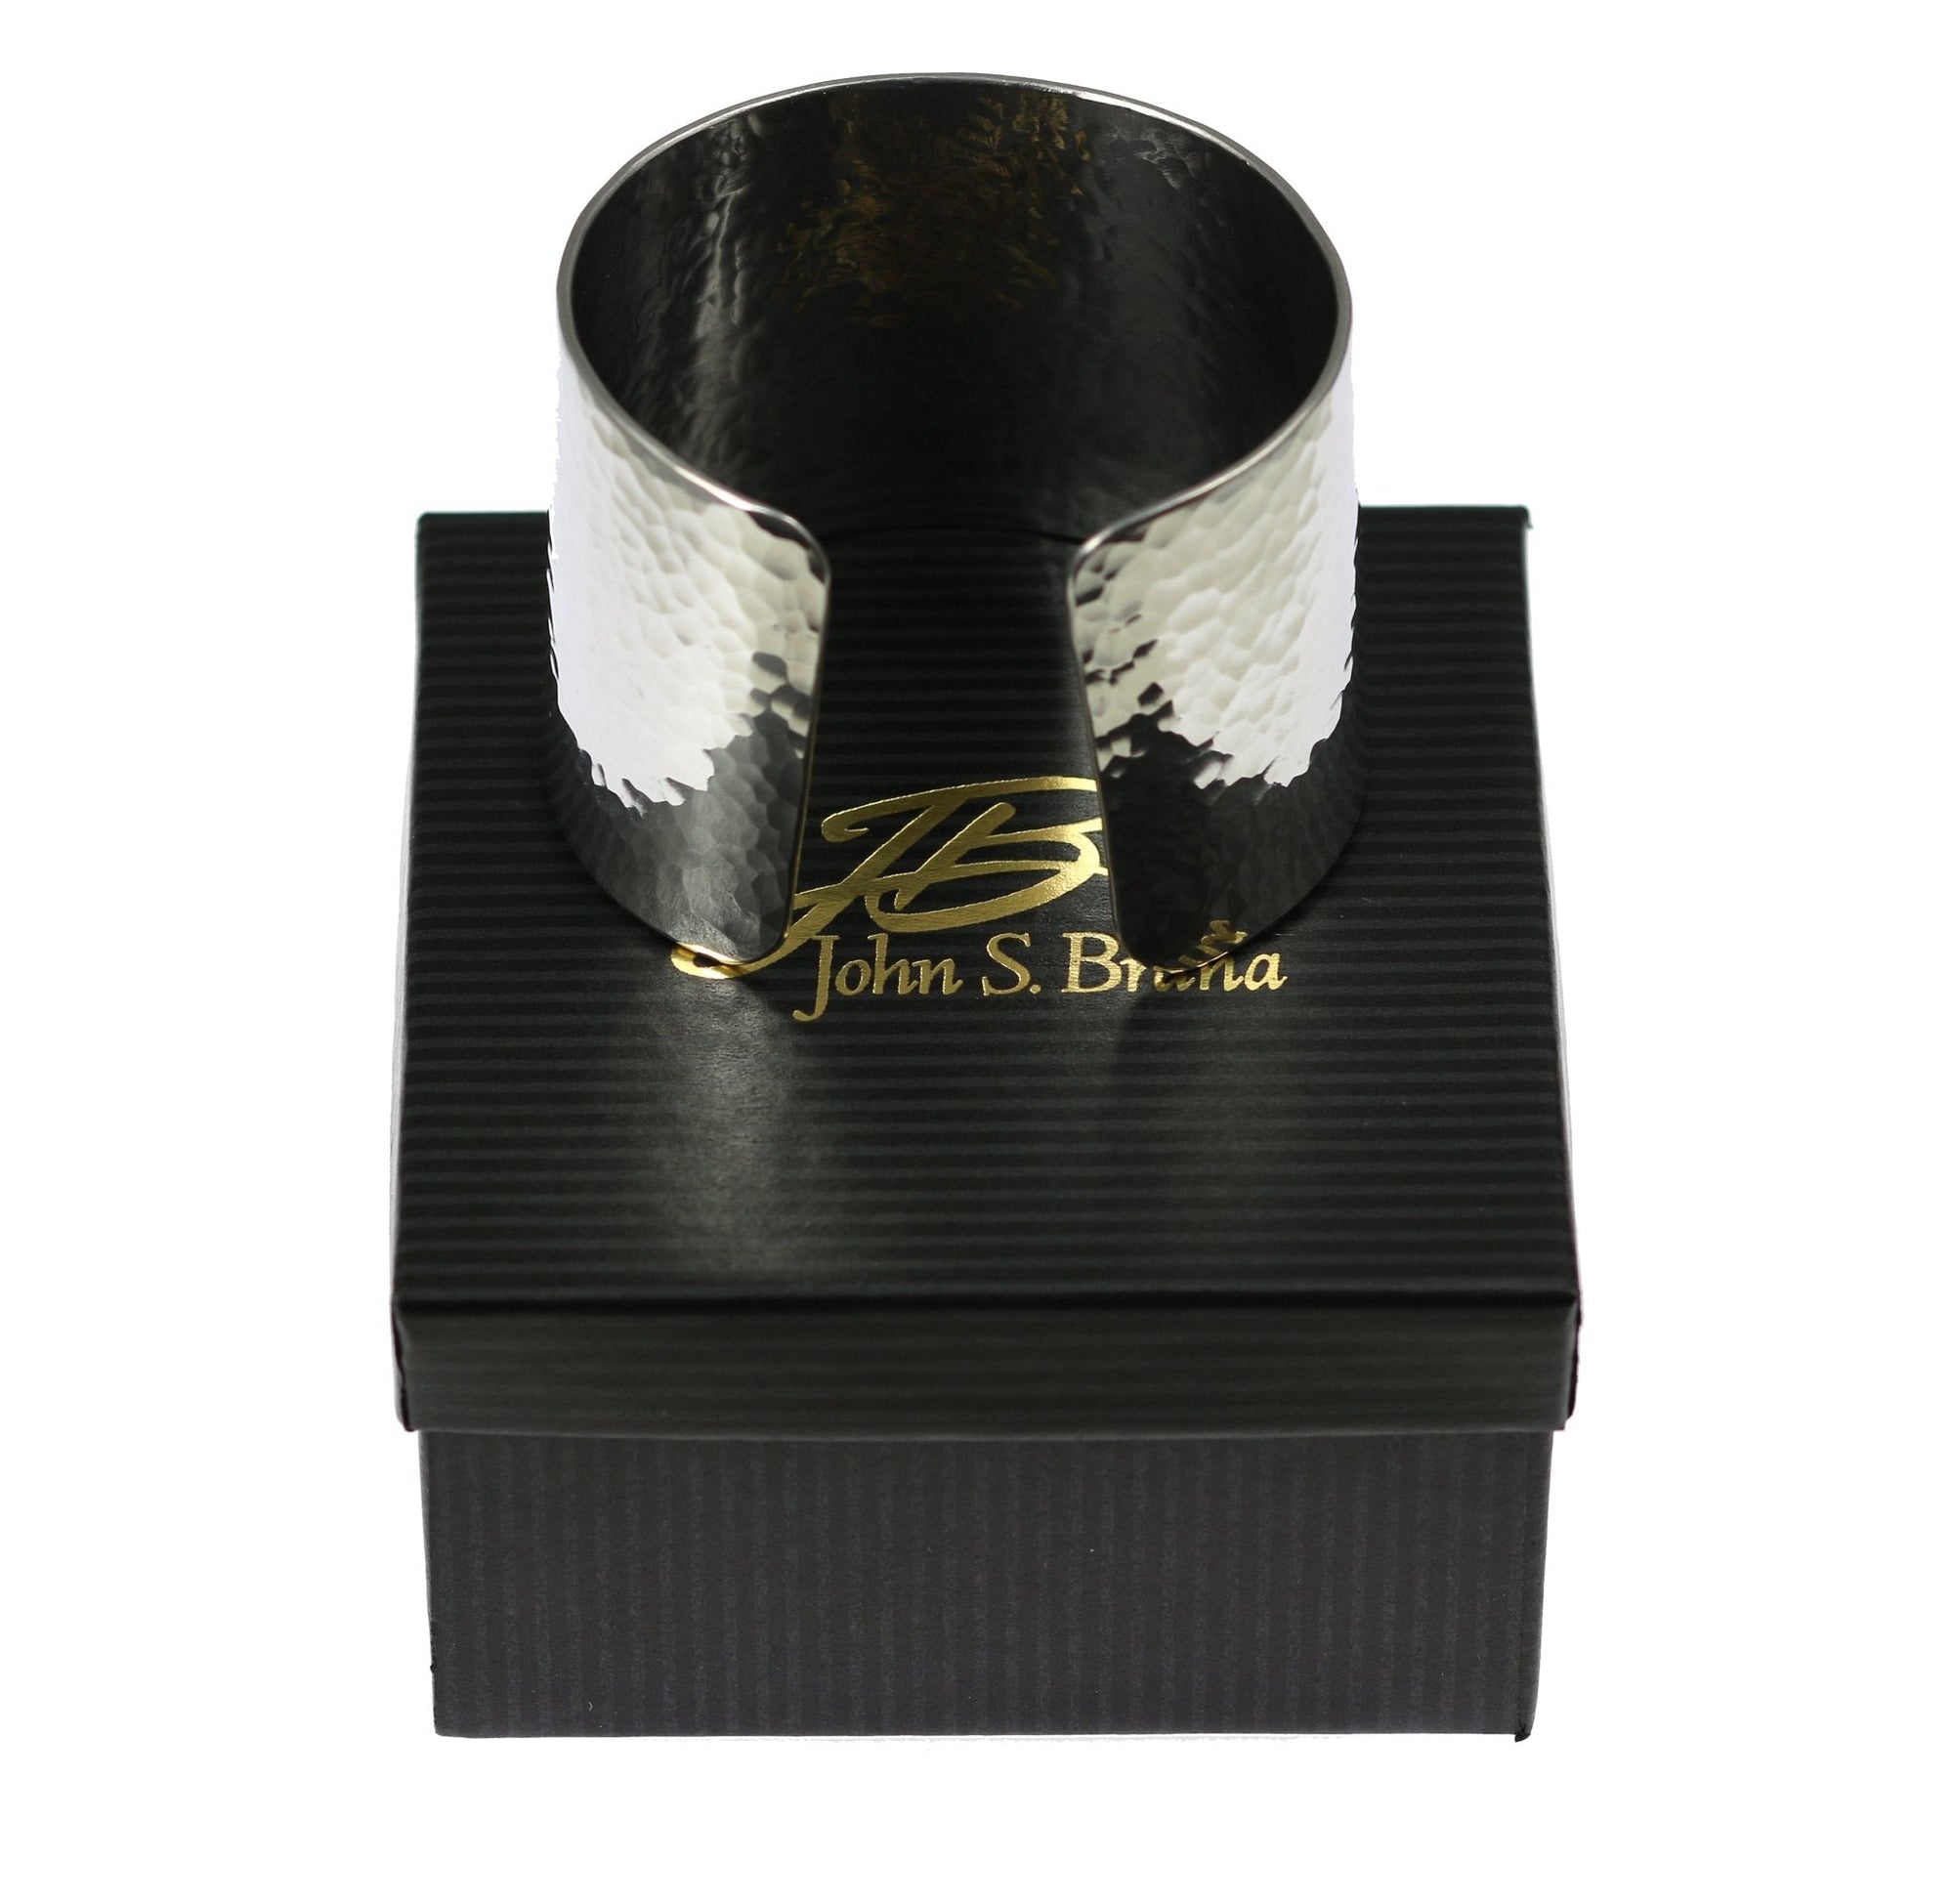 Hammered Aluminum Cuff Bracelet in Black Gift Box